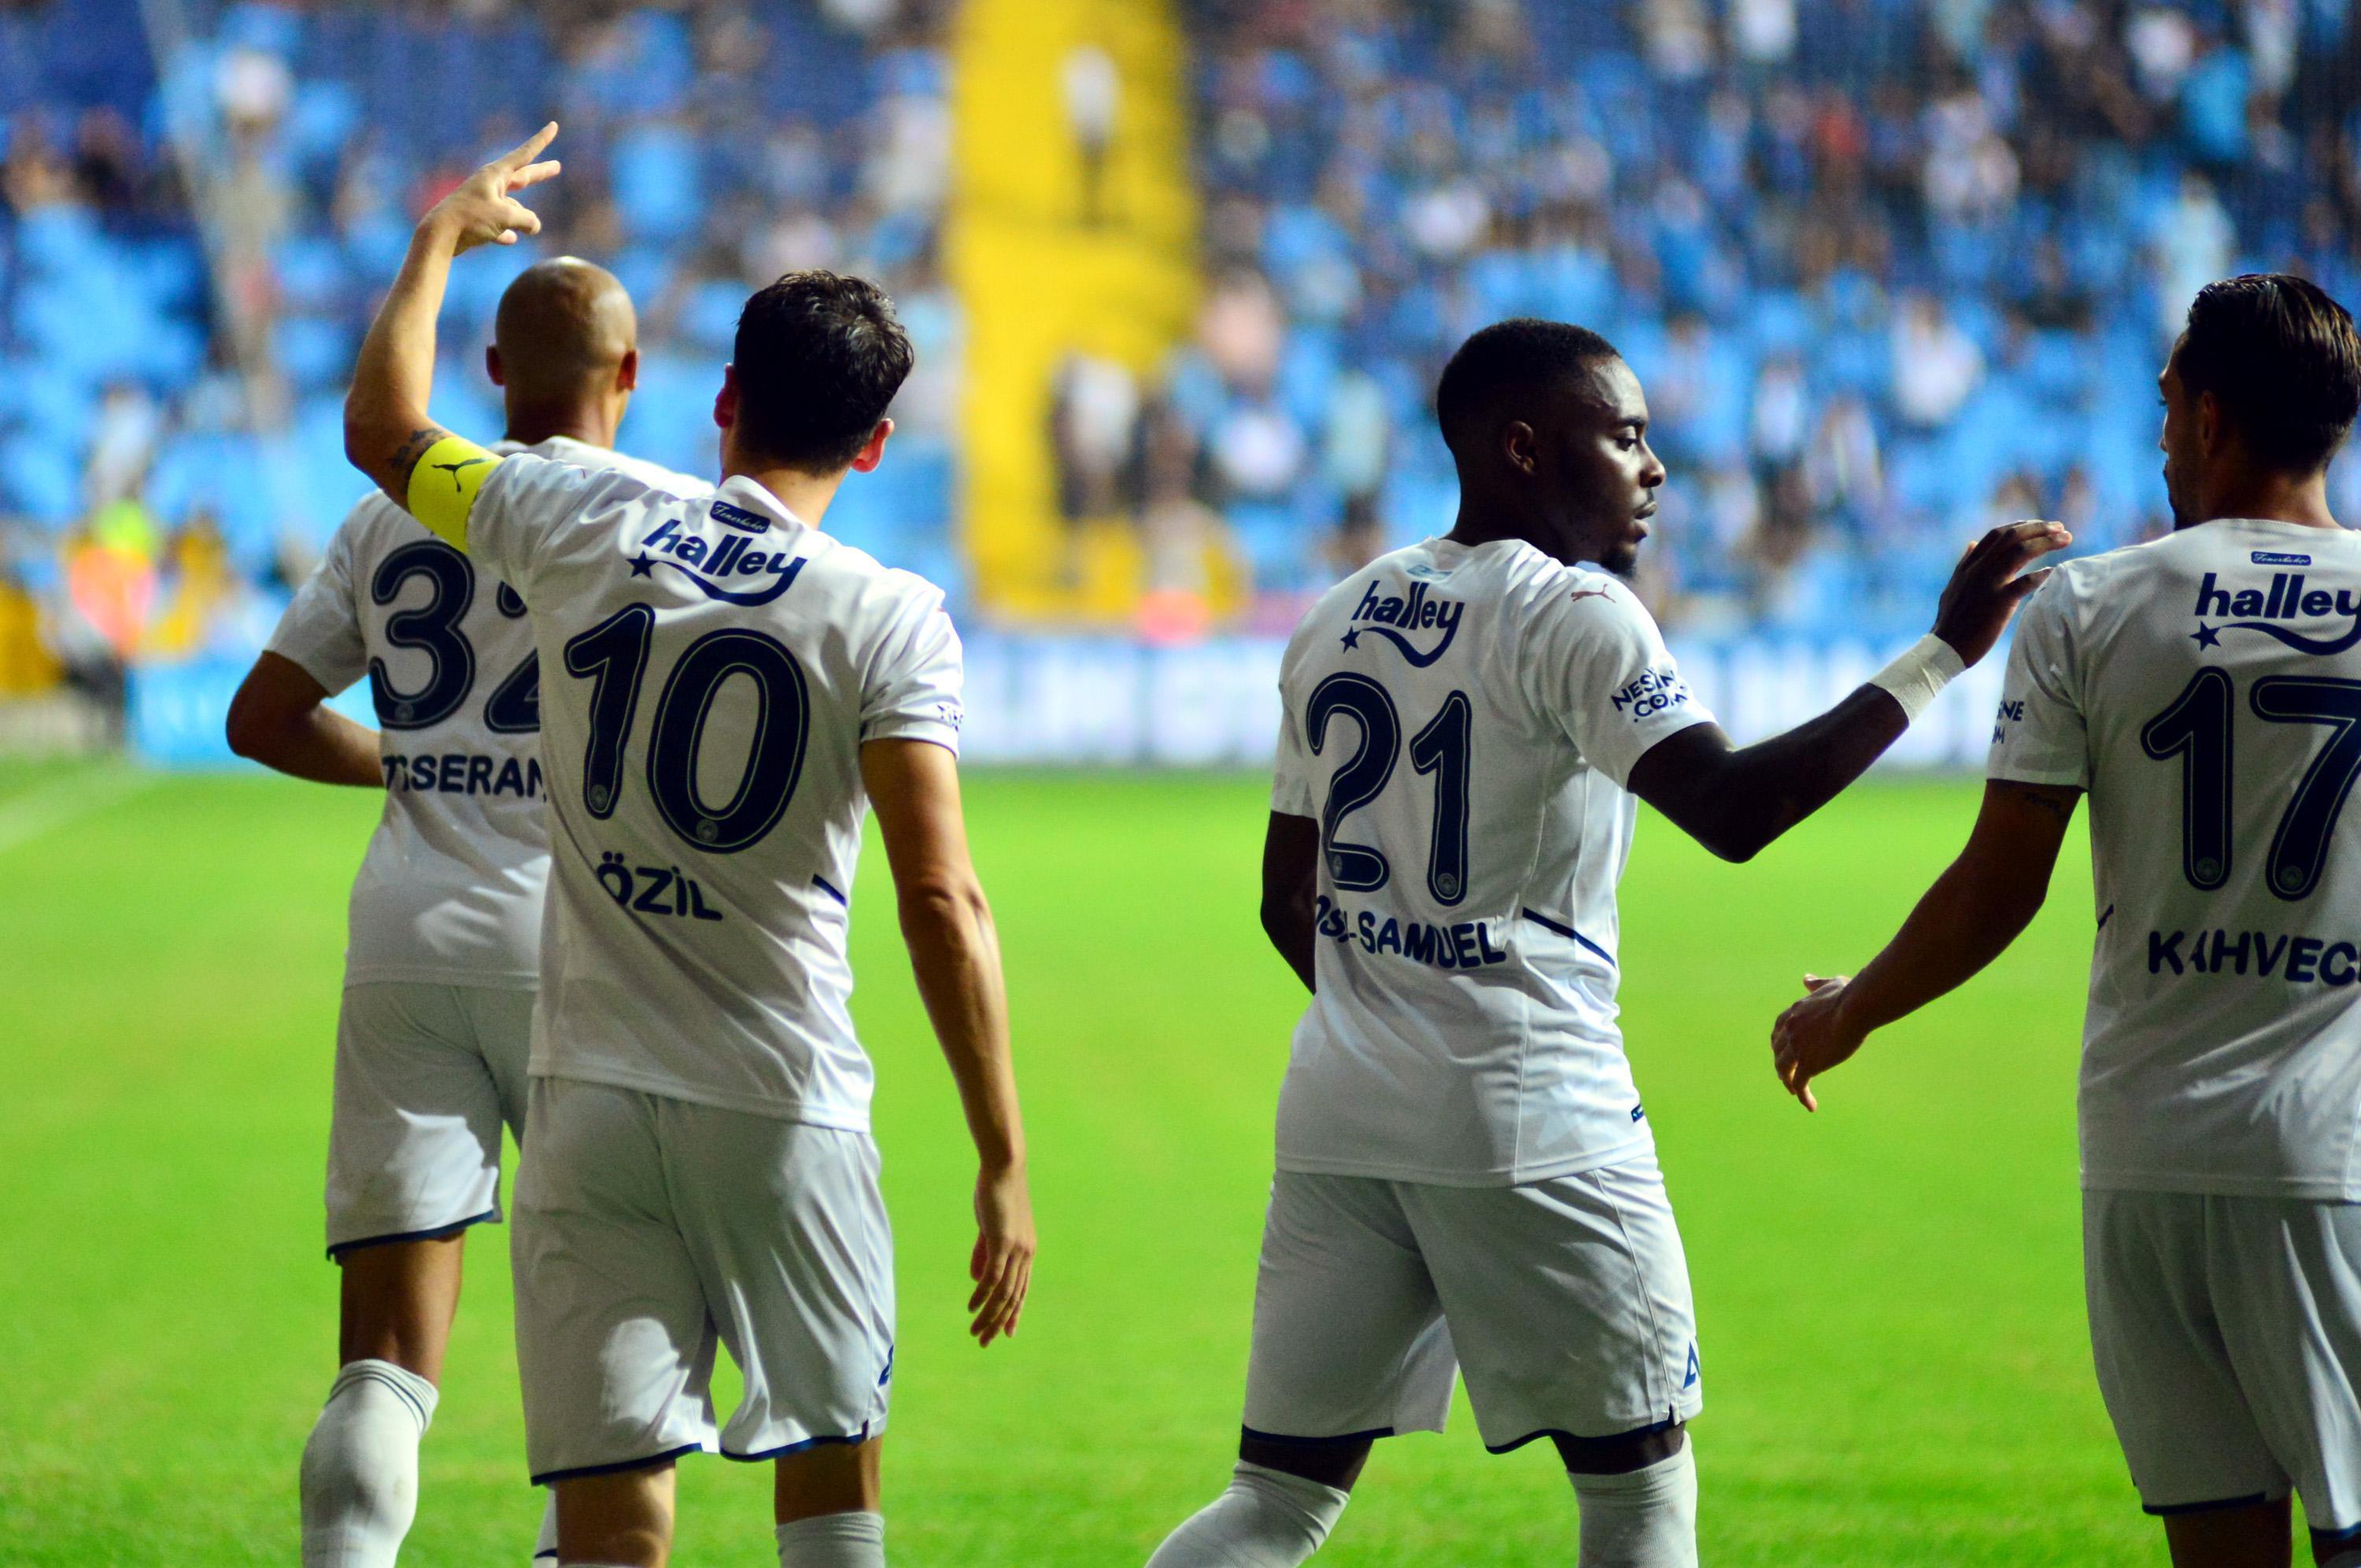 (ÖZET) Adana Demirspor - Fenerbahçe maç sonucu: 0-1